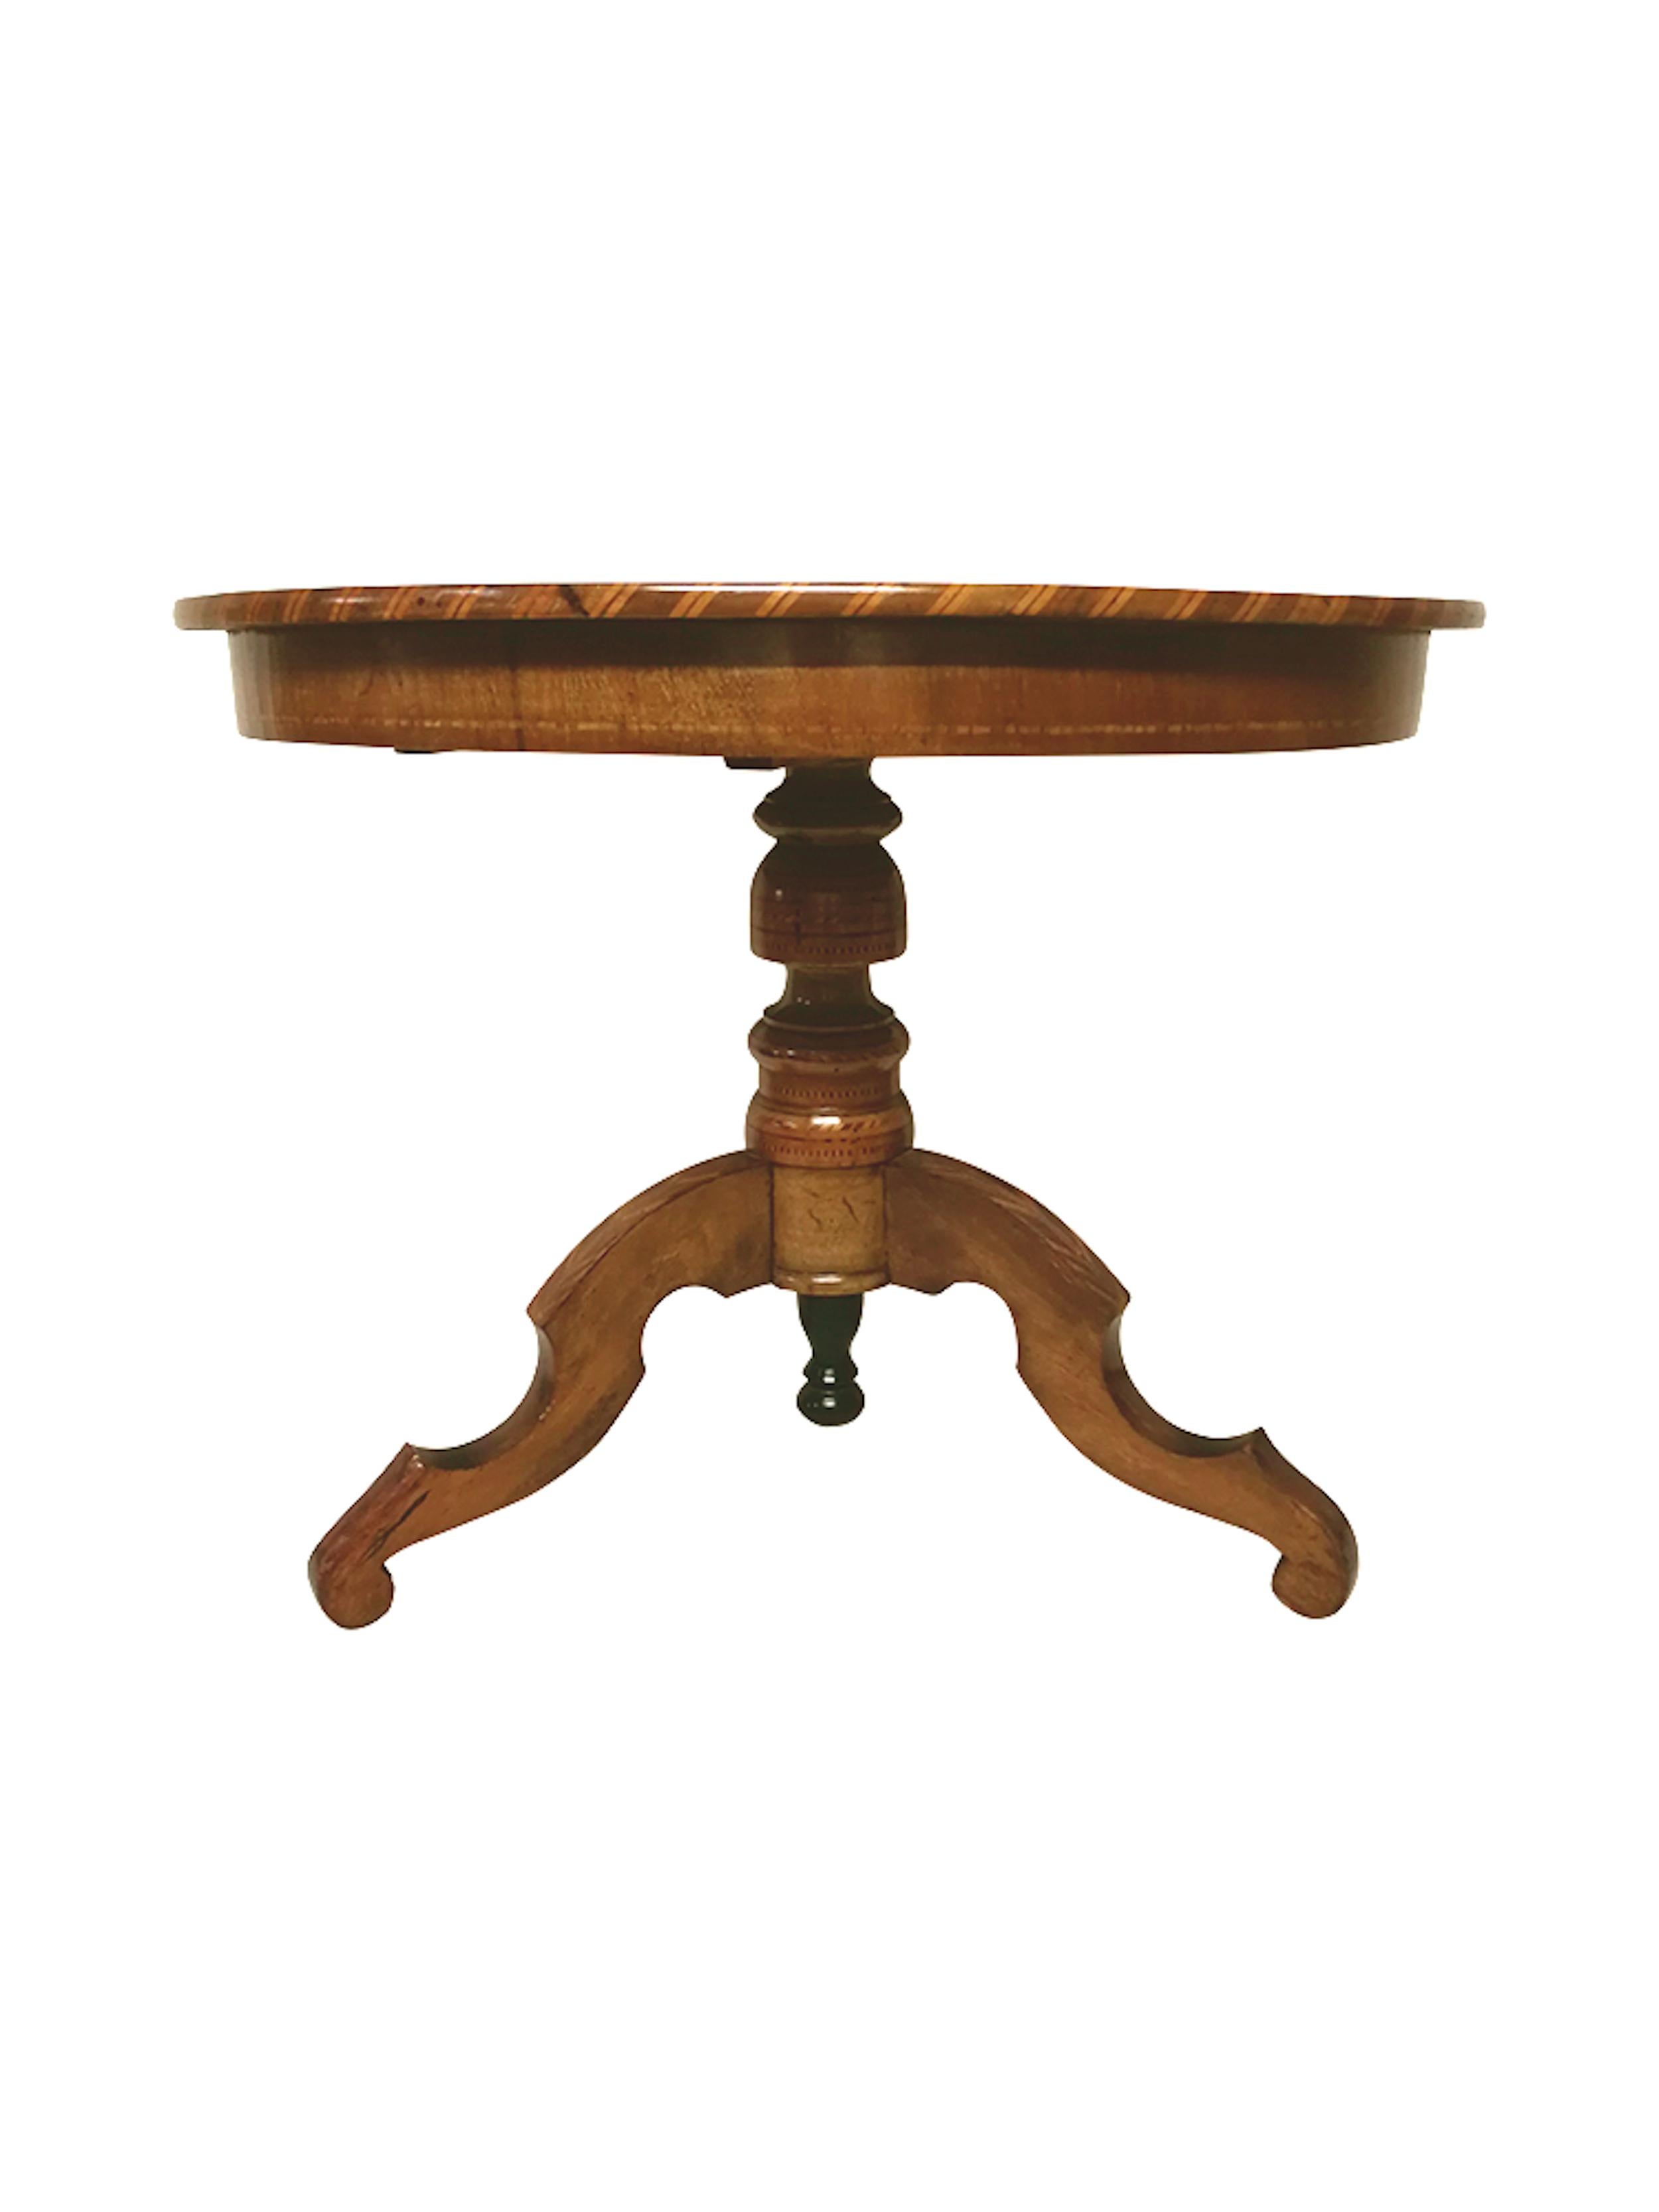 19th century Dutch marquetry round pedestal table, 